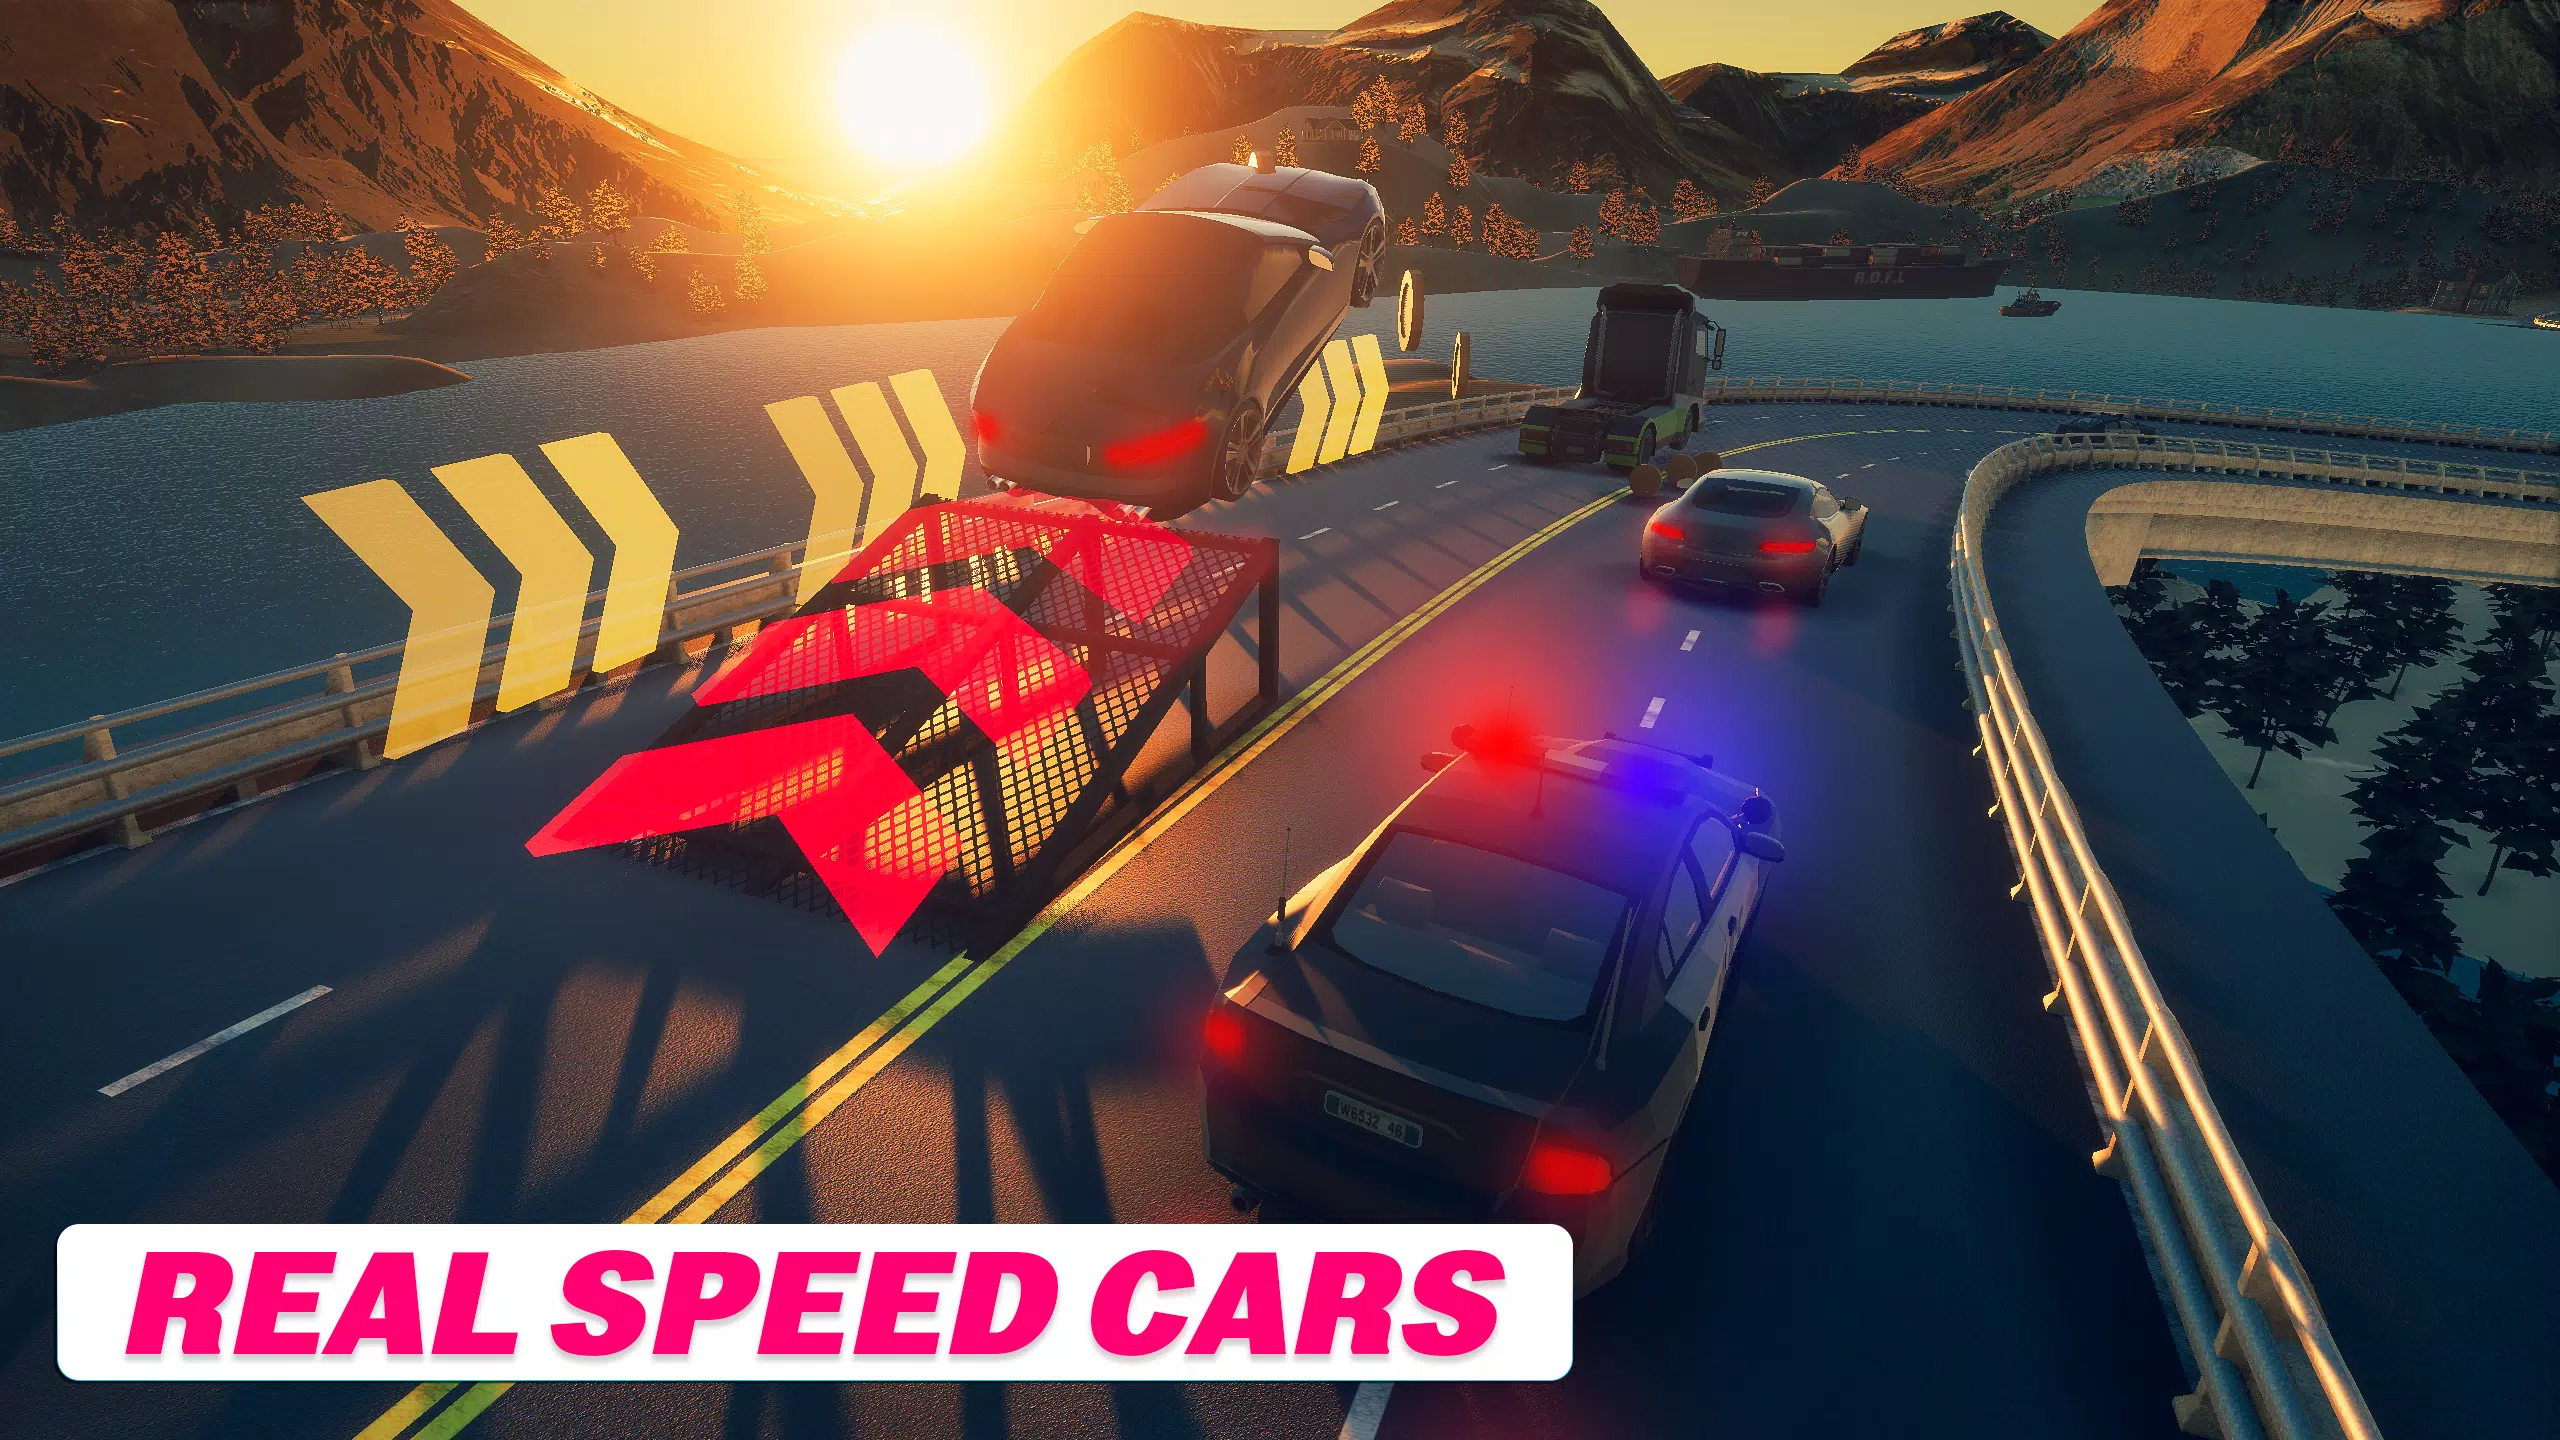 Real Car Offline Racing Games for Kids - Race Master 3D - Car